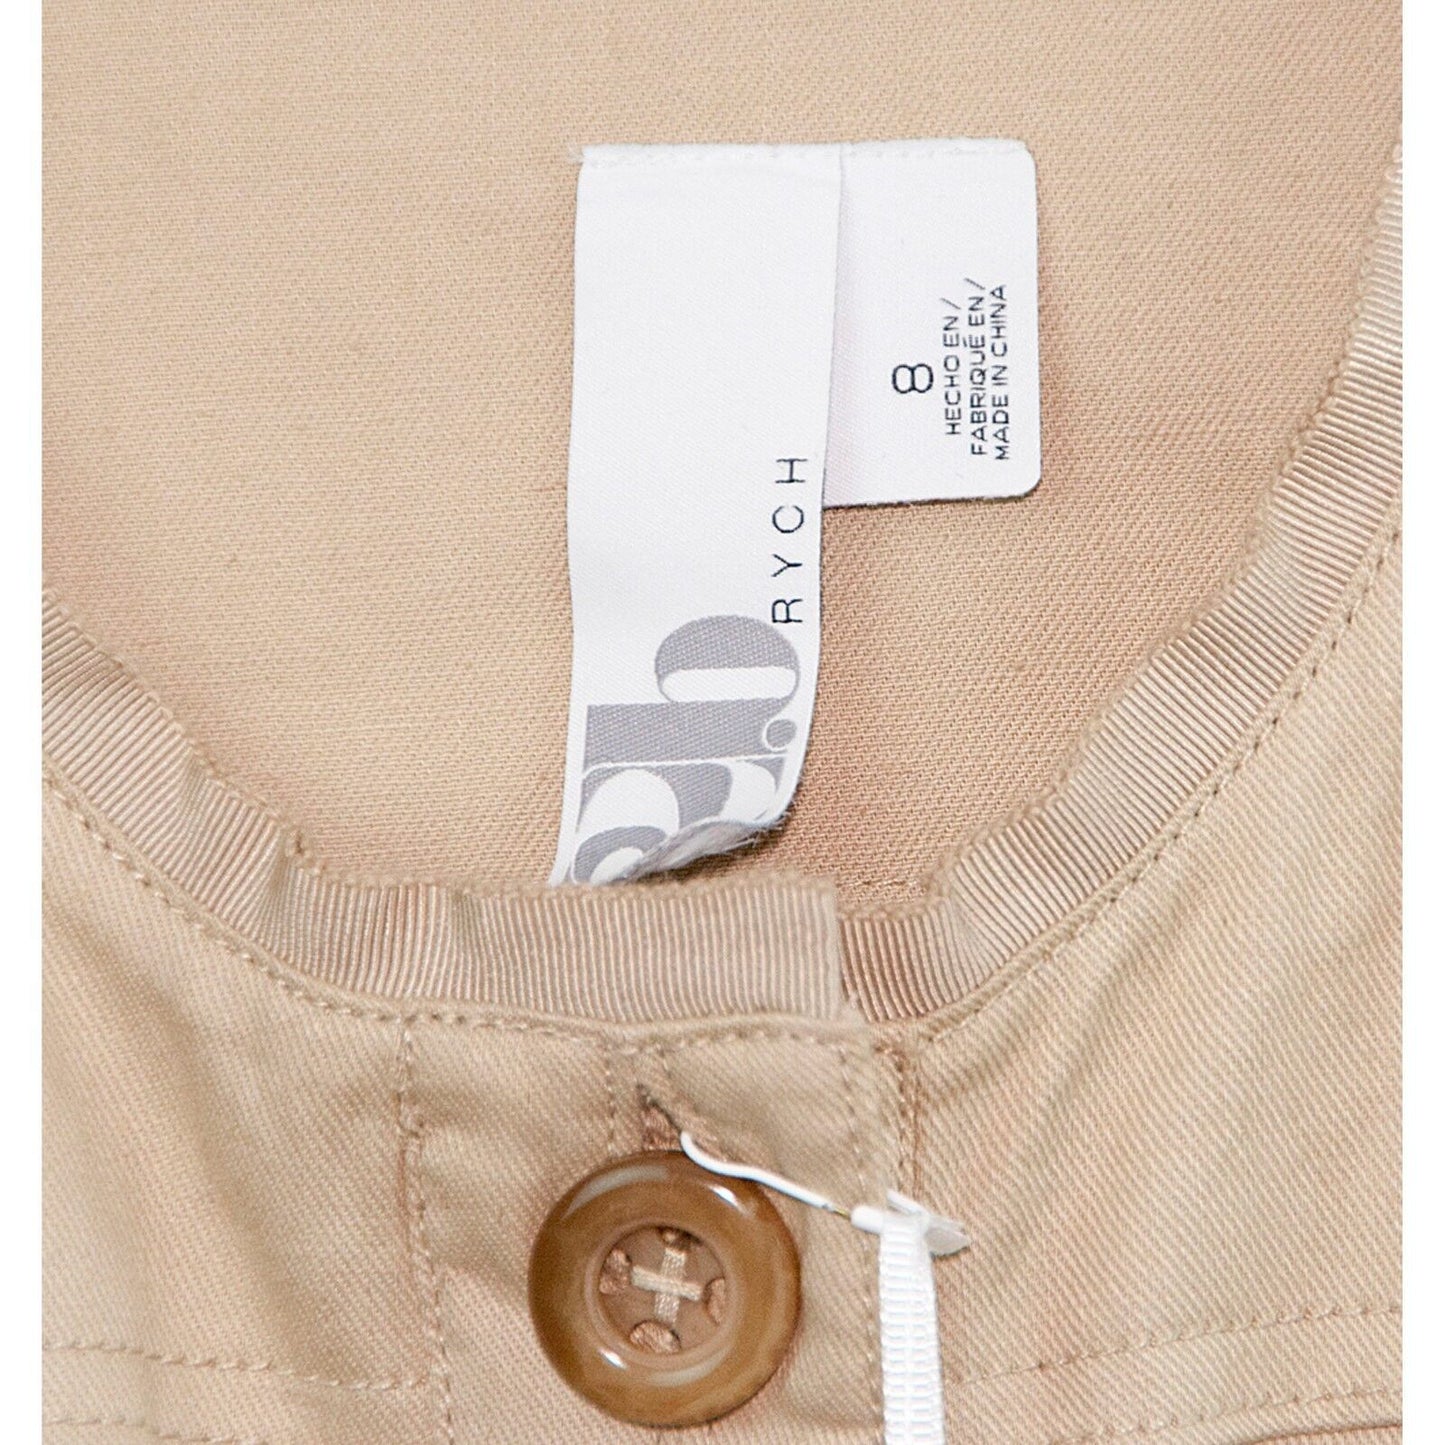 2b.Rych Walnut Spring Cotton Linen Military Safari Jacket Size 8 NWT